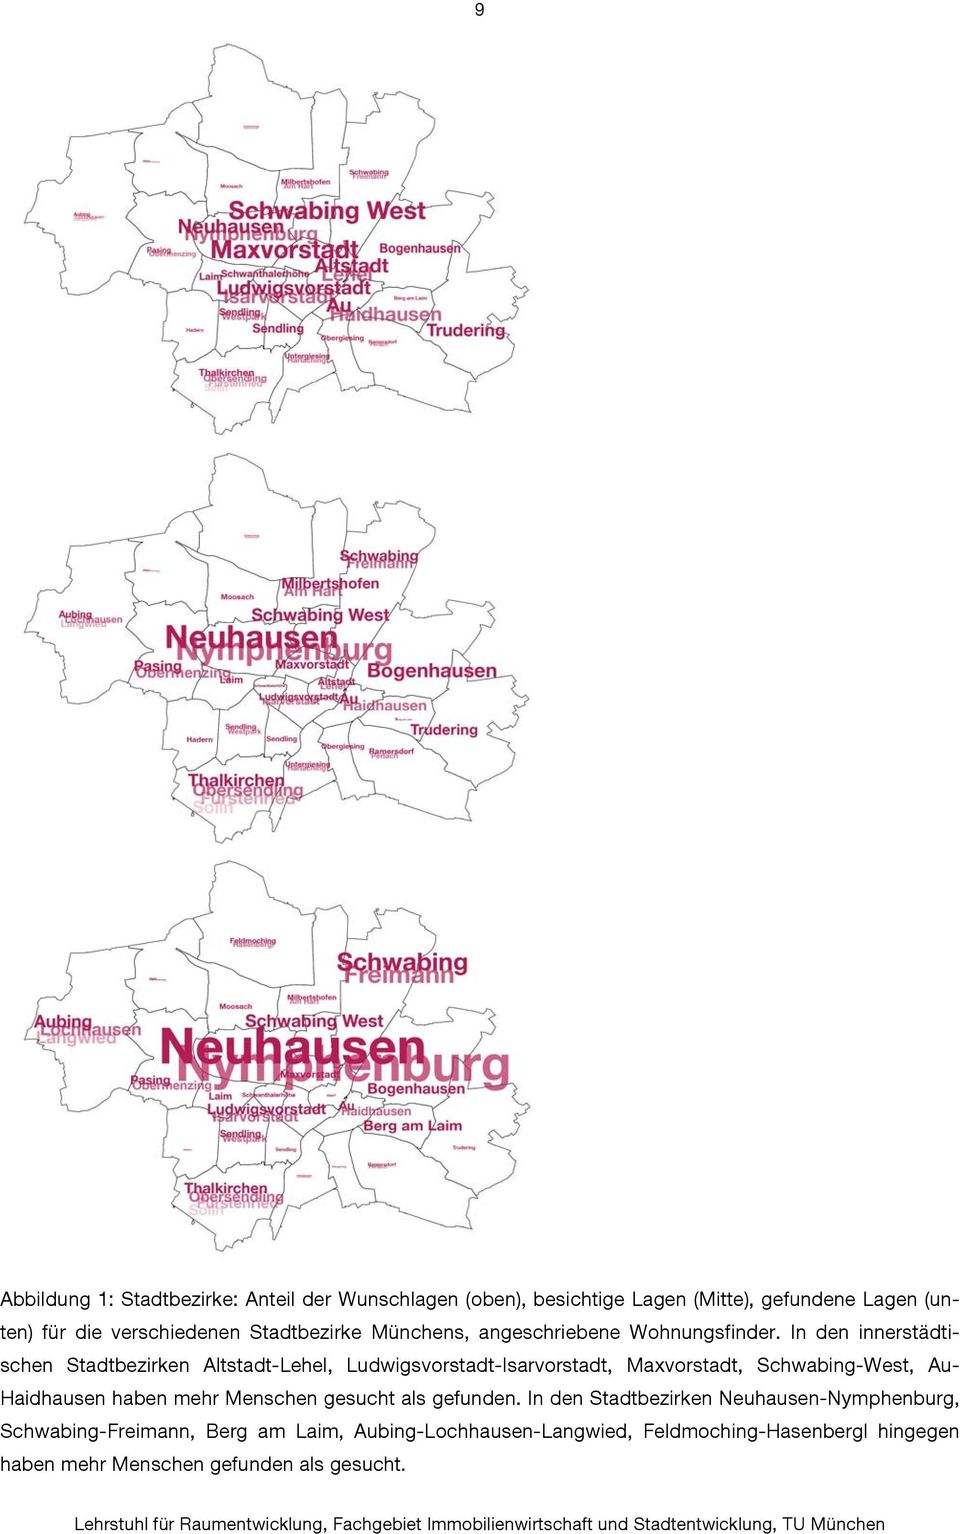 In den innerstädtischen Stadtbezirken Altstadt-Lehel, Ludwigsvorstadt-Isarvorstadt, Maxvorstadt, Schwabing-West, Au- Haidhausen haben